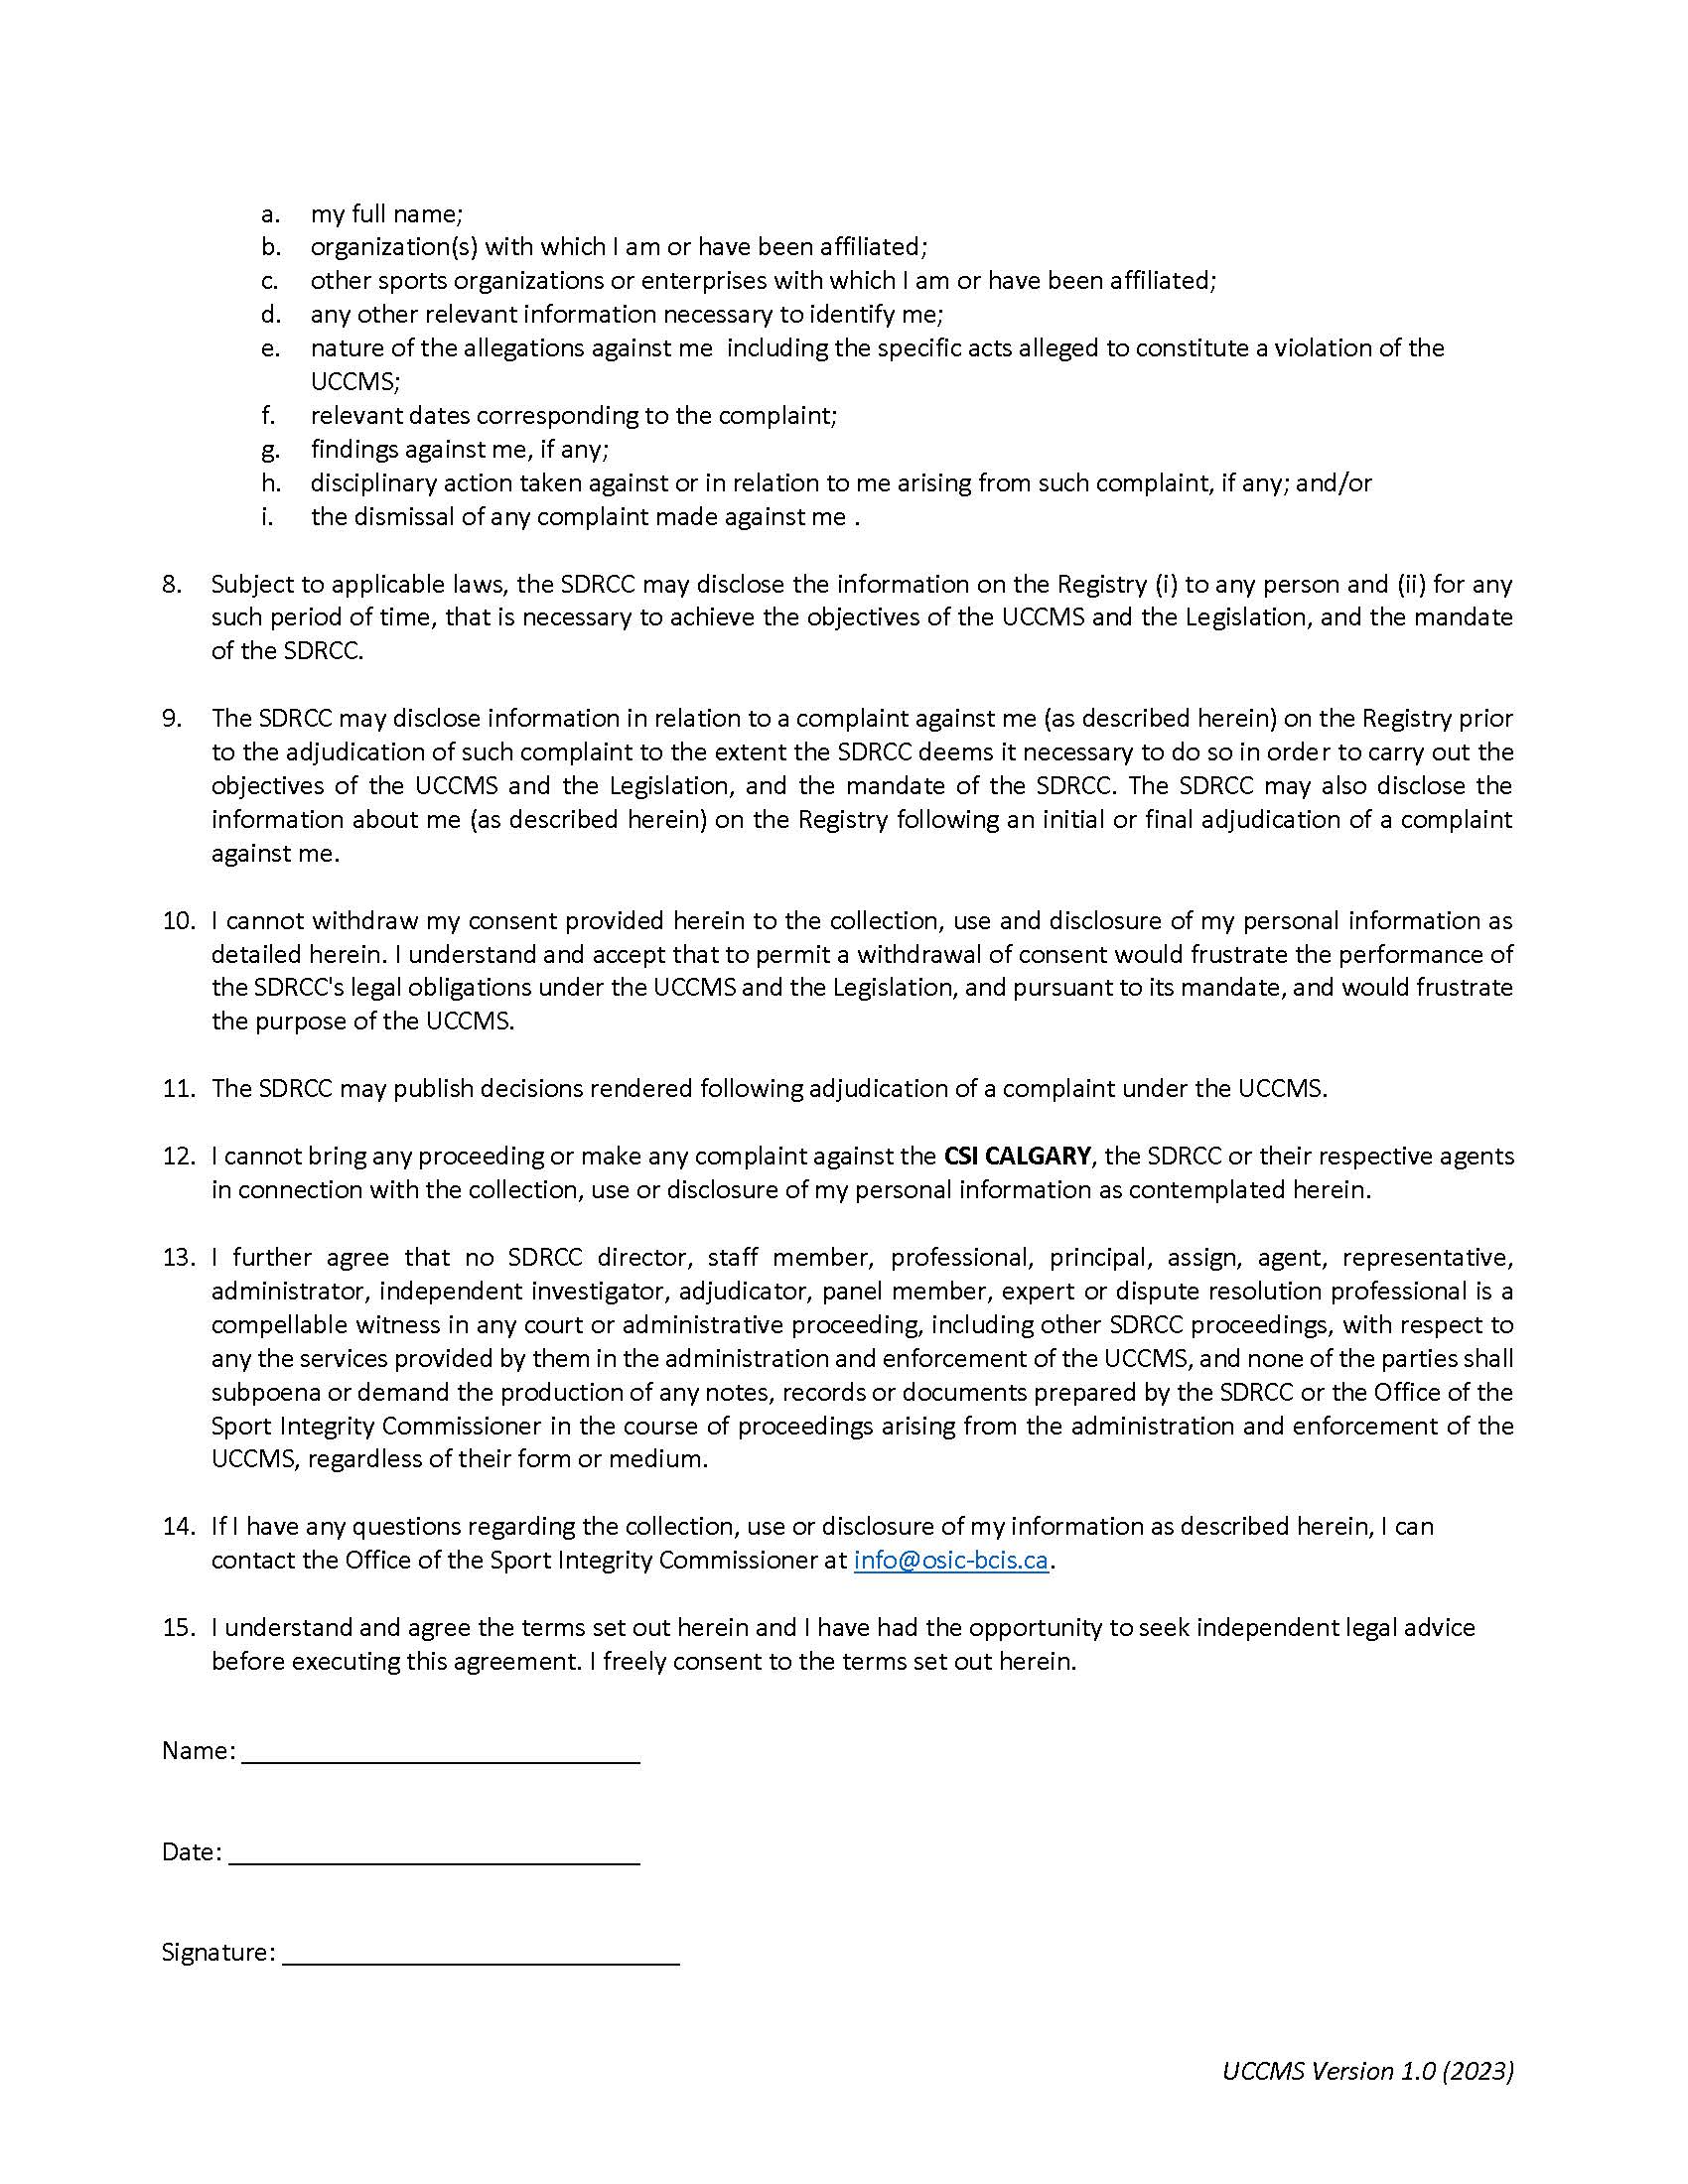 UCCMS Consent Form CSIAB v1.2023 Page 2